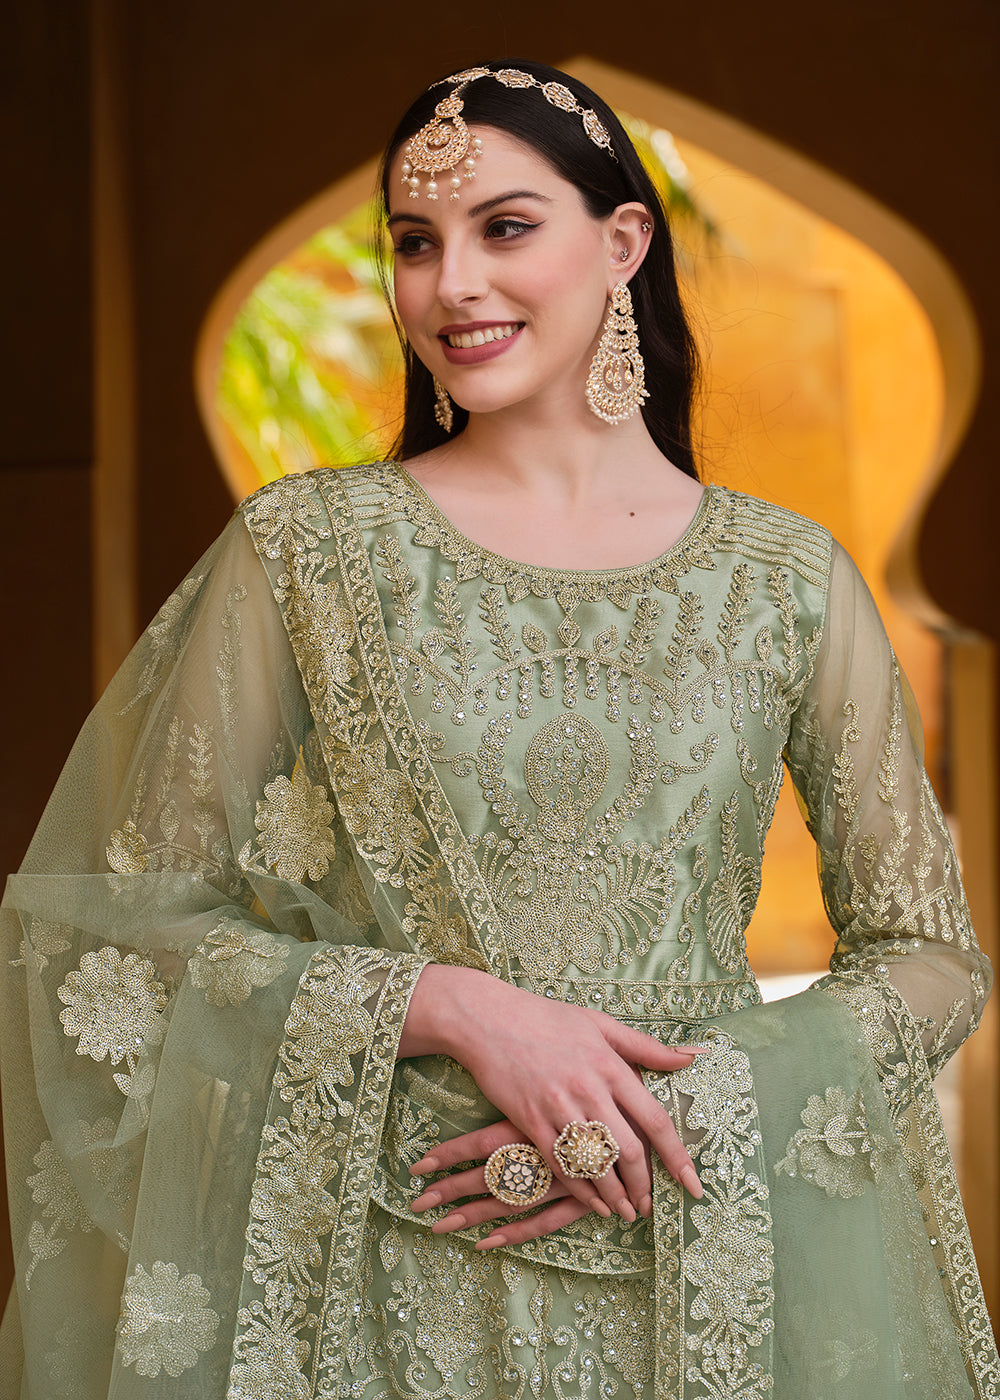 Buy Now Pista Green Pure Butterfly Net Wedding Wear Anarkali Suit Online in USA, UK, Australia, New Zealand, Canada & Worldwide at Empress Clothing. 